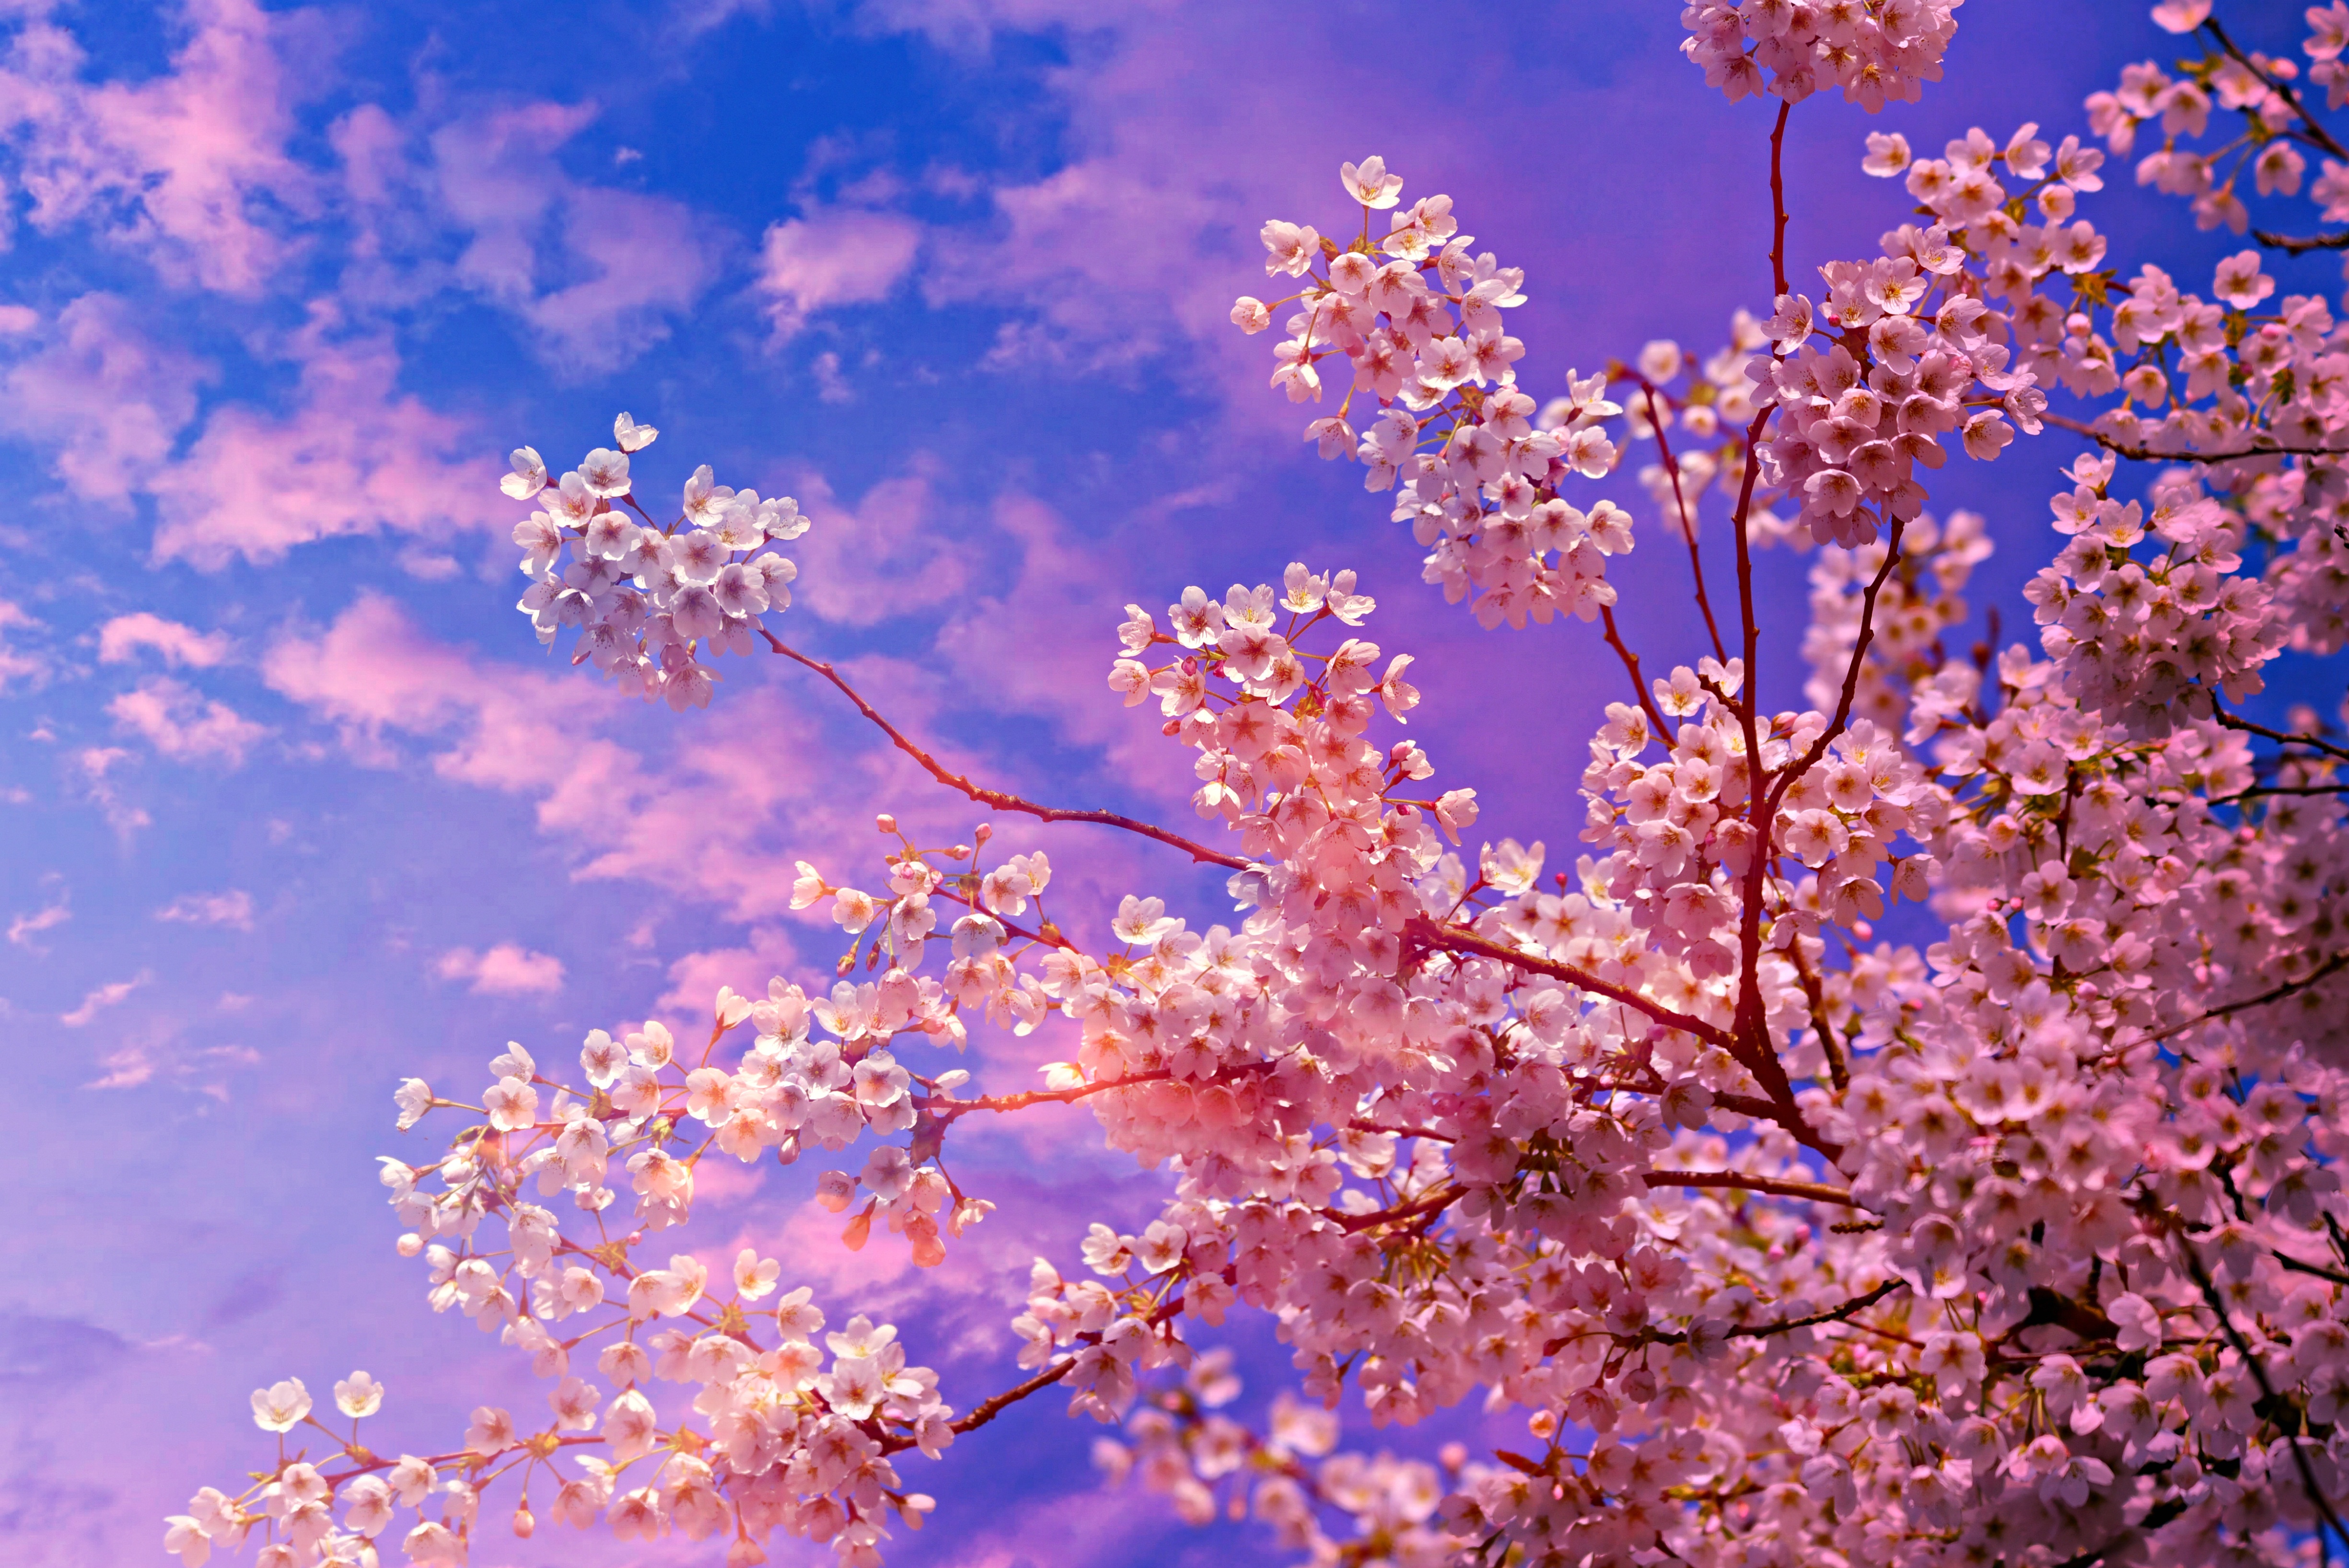 Animated Cherry Blossom Tree Wallpaper - Ecran Puzzling Onirique